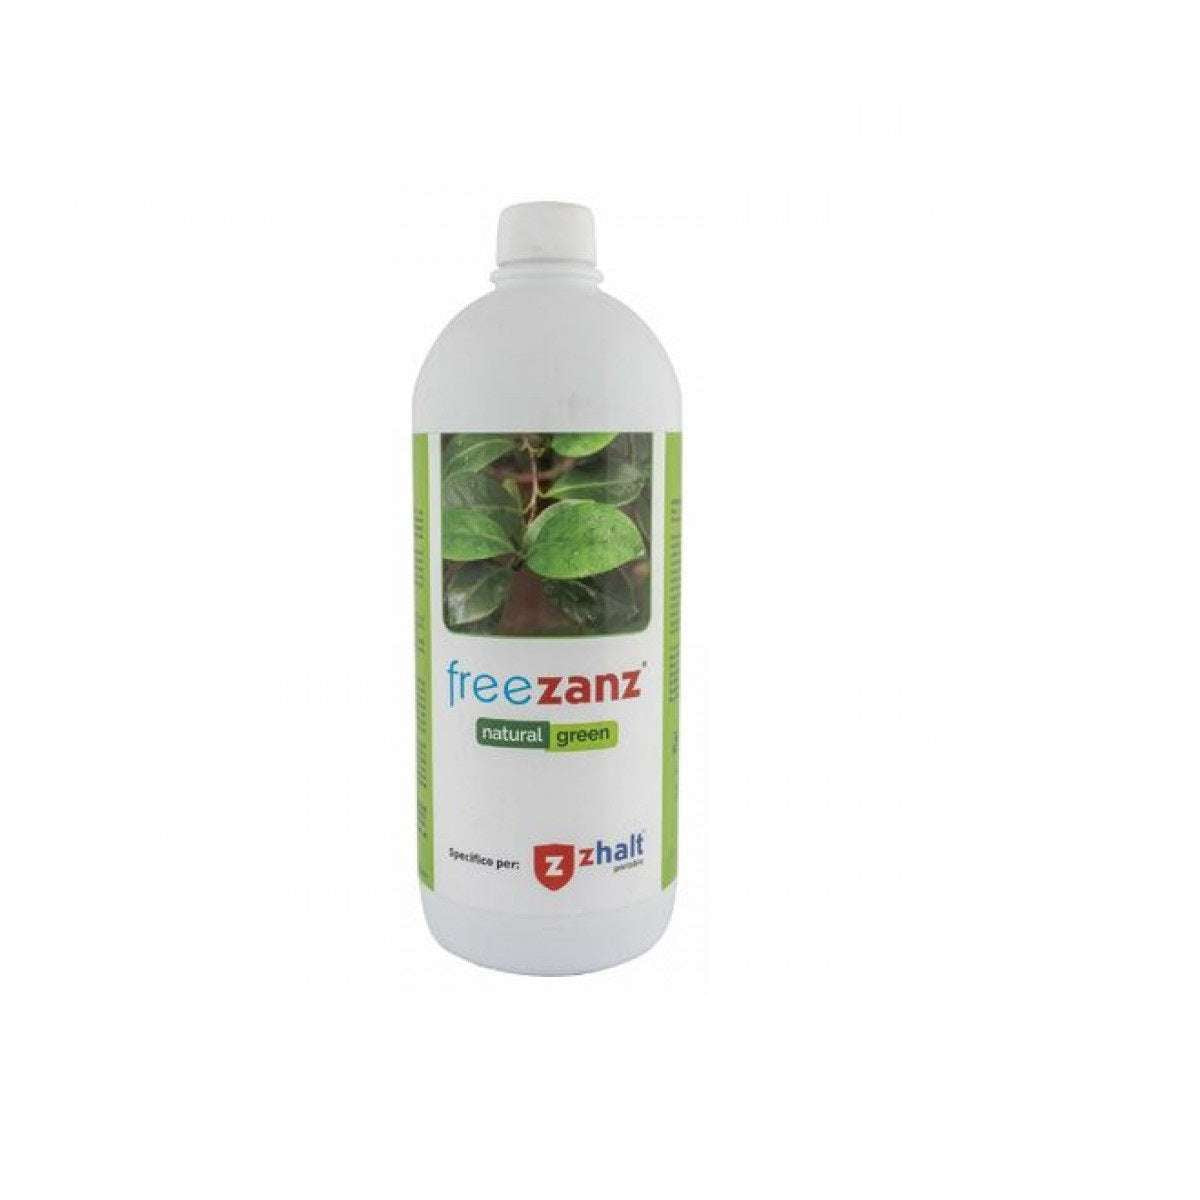 Mosquito repellent capacity 1 LT for Zhalt Portable - Freezanz Natural Green